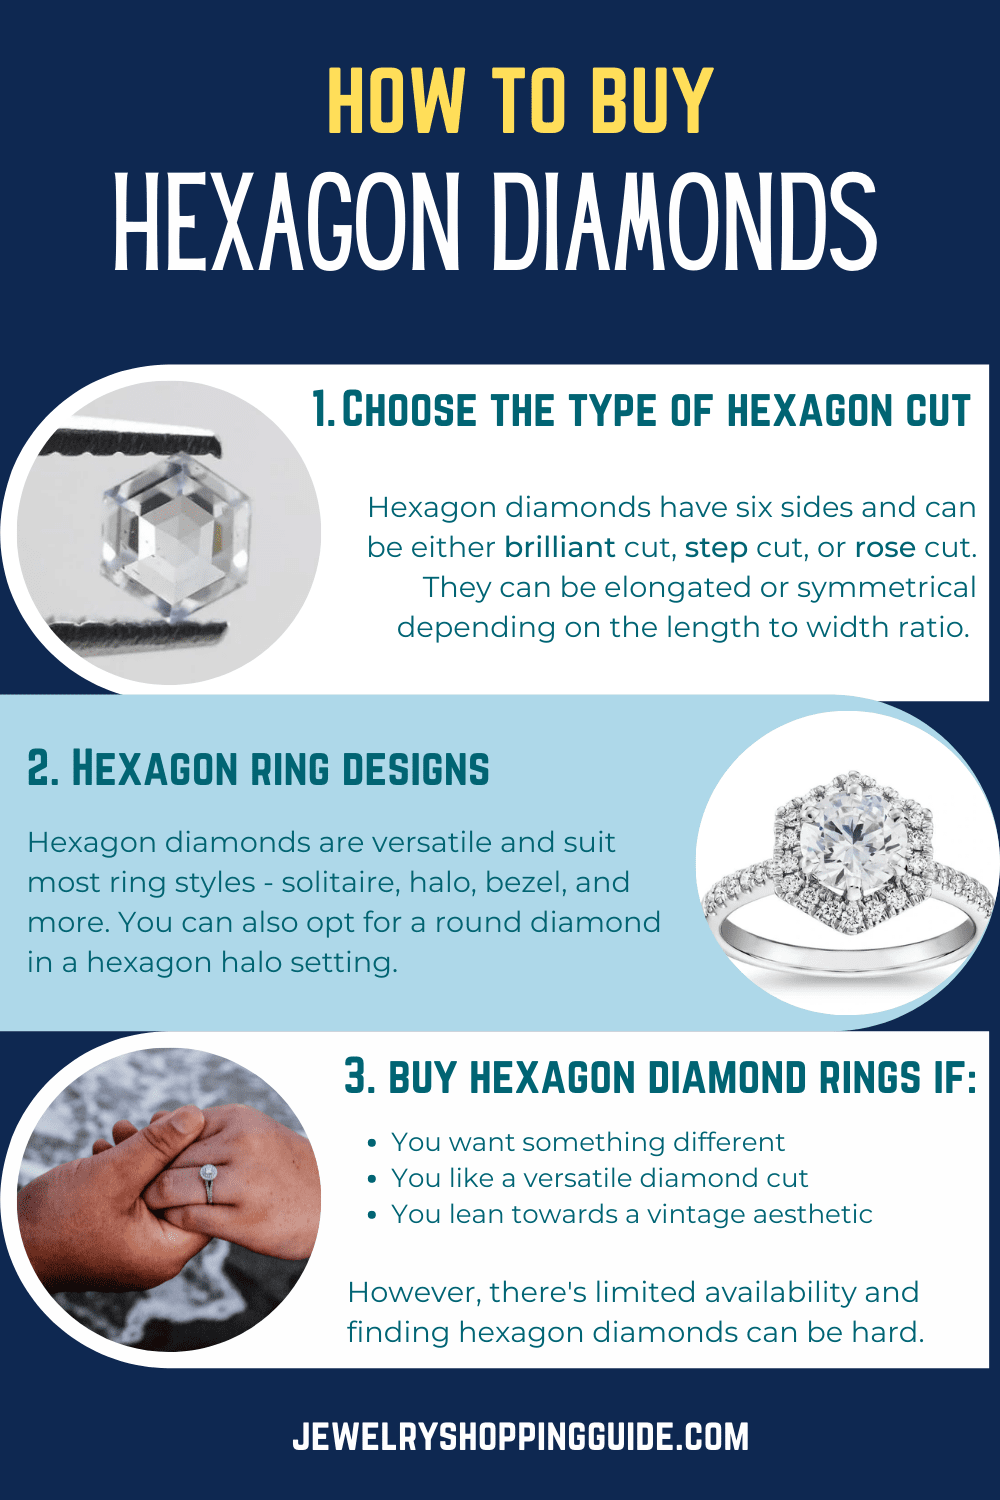 How to buy hexagon diamond rings